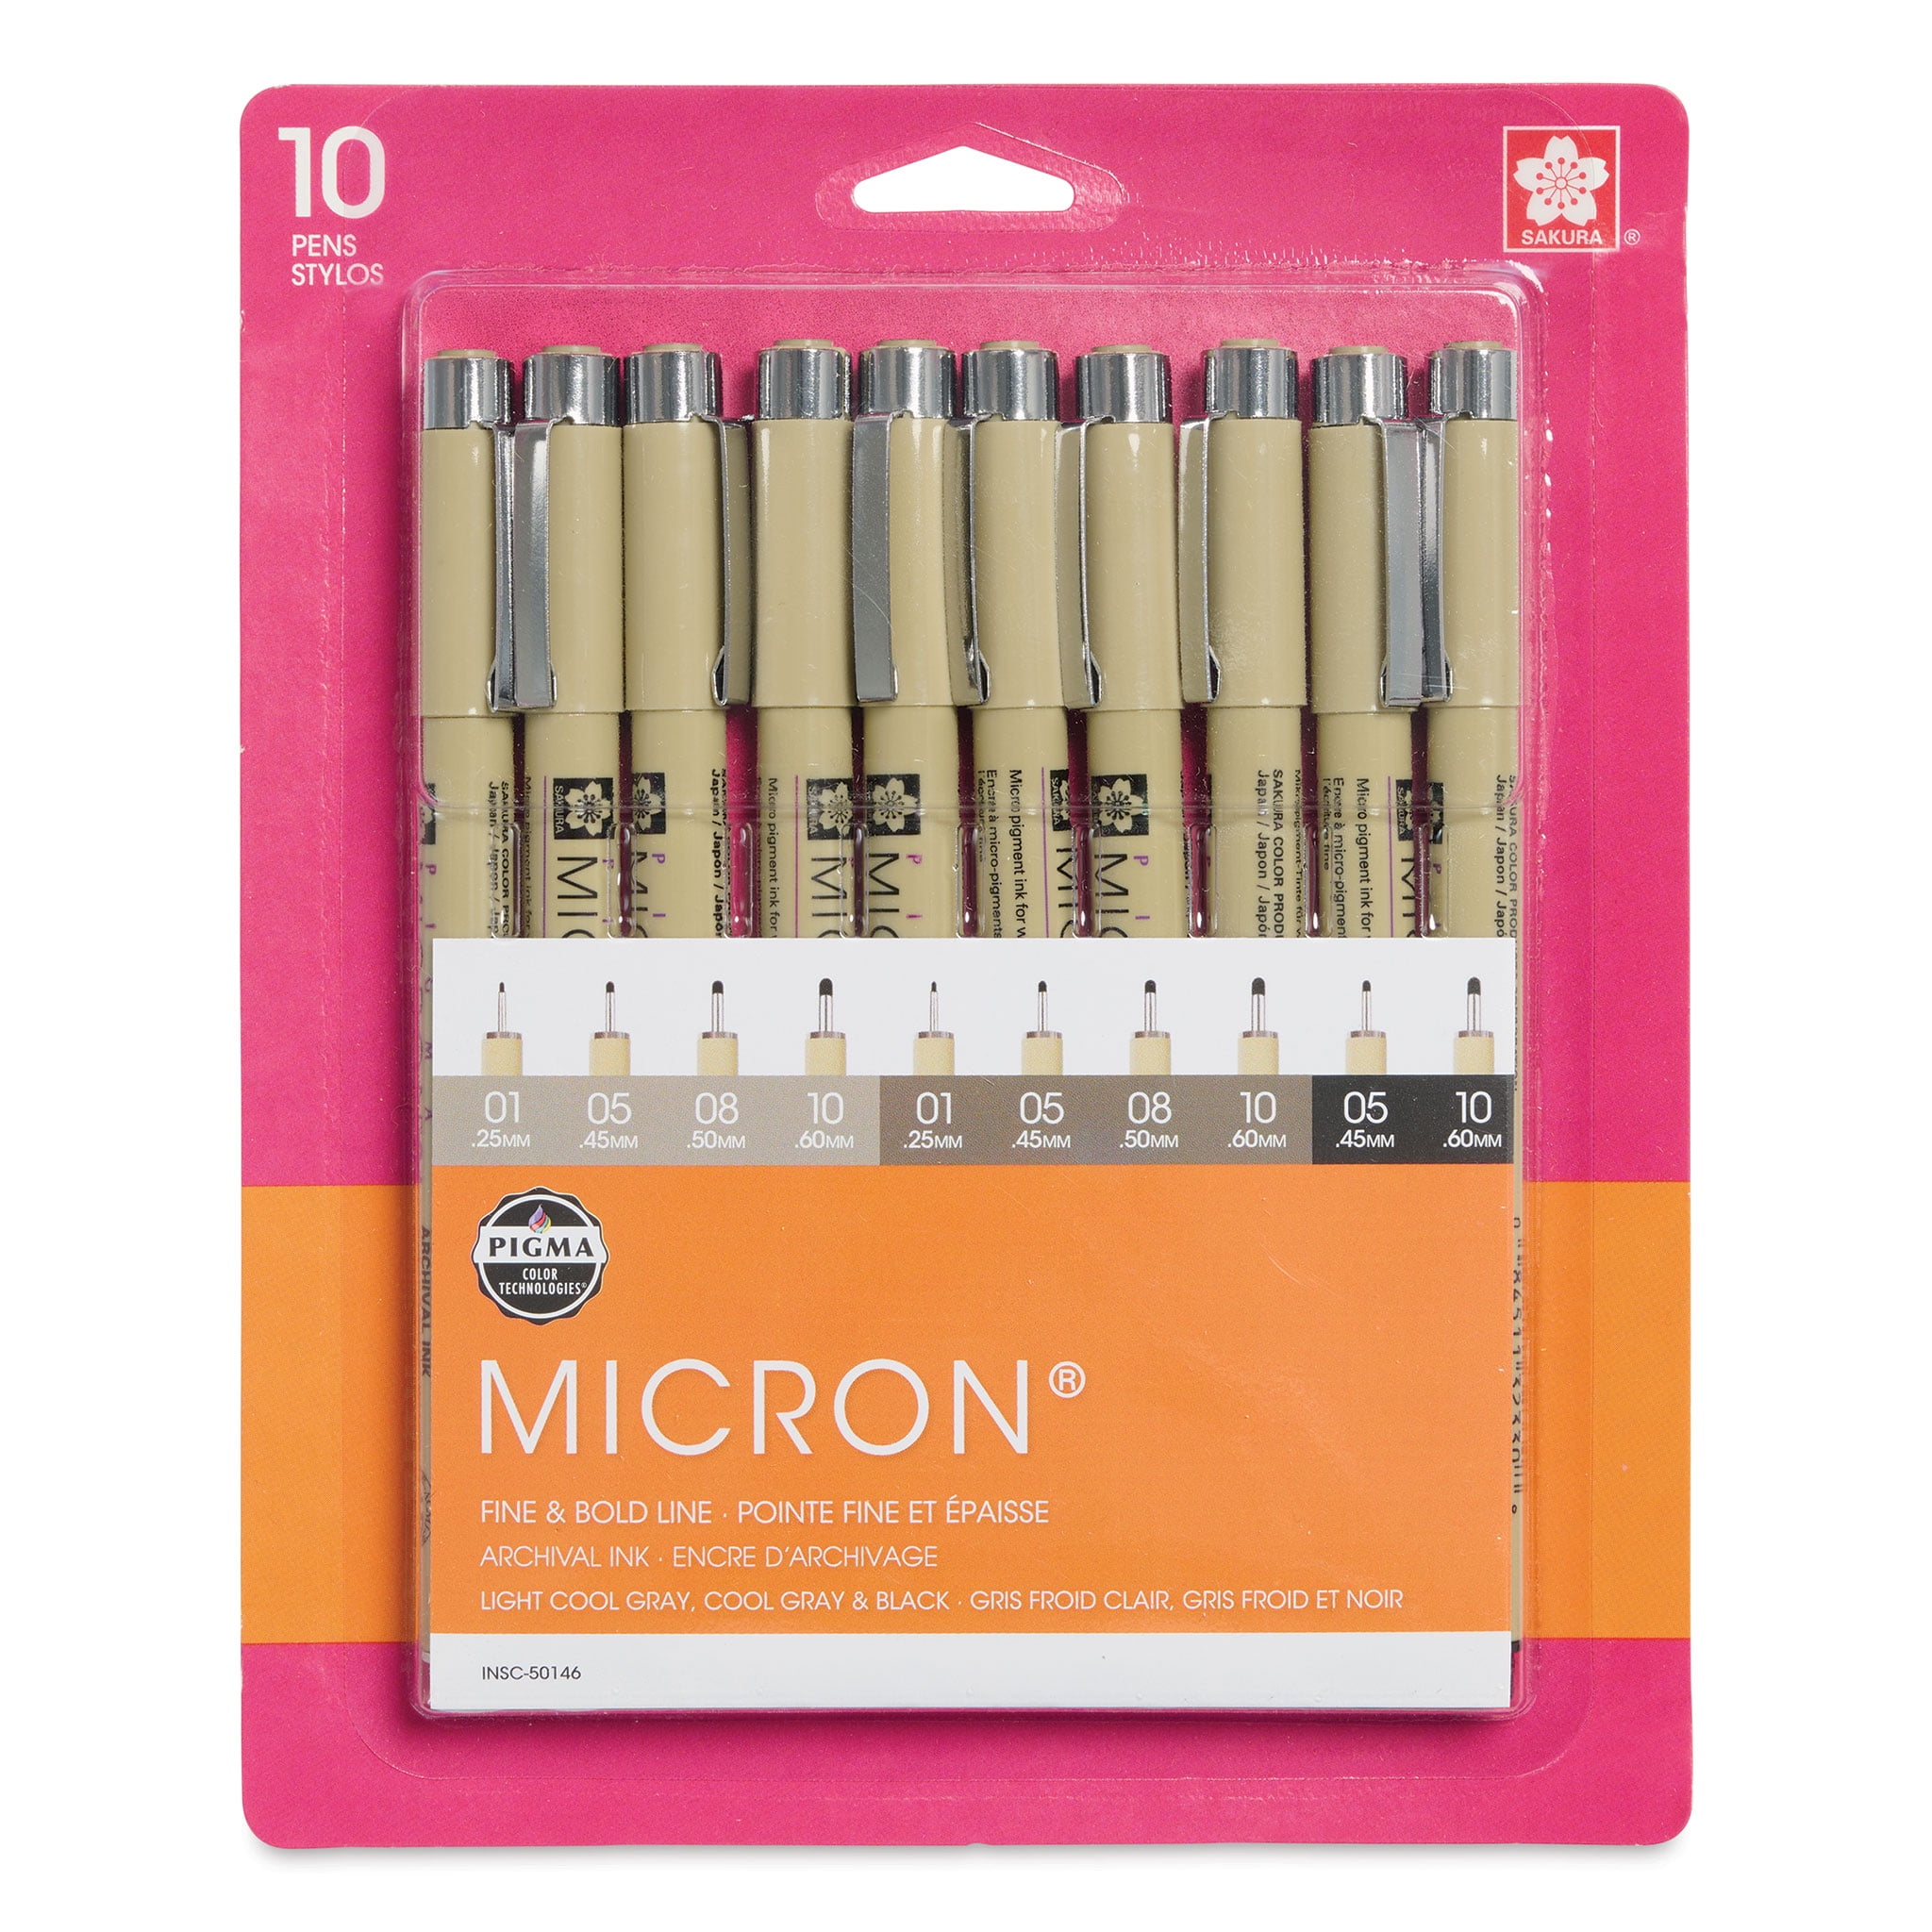 Sakura Pigma Micron Pen Singles  Southwestern College Campus Store